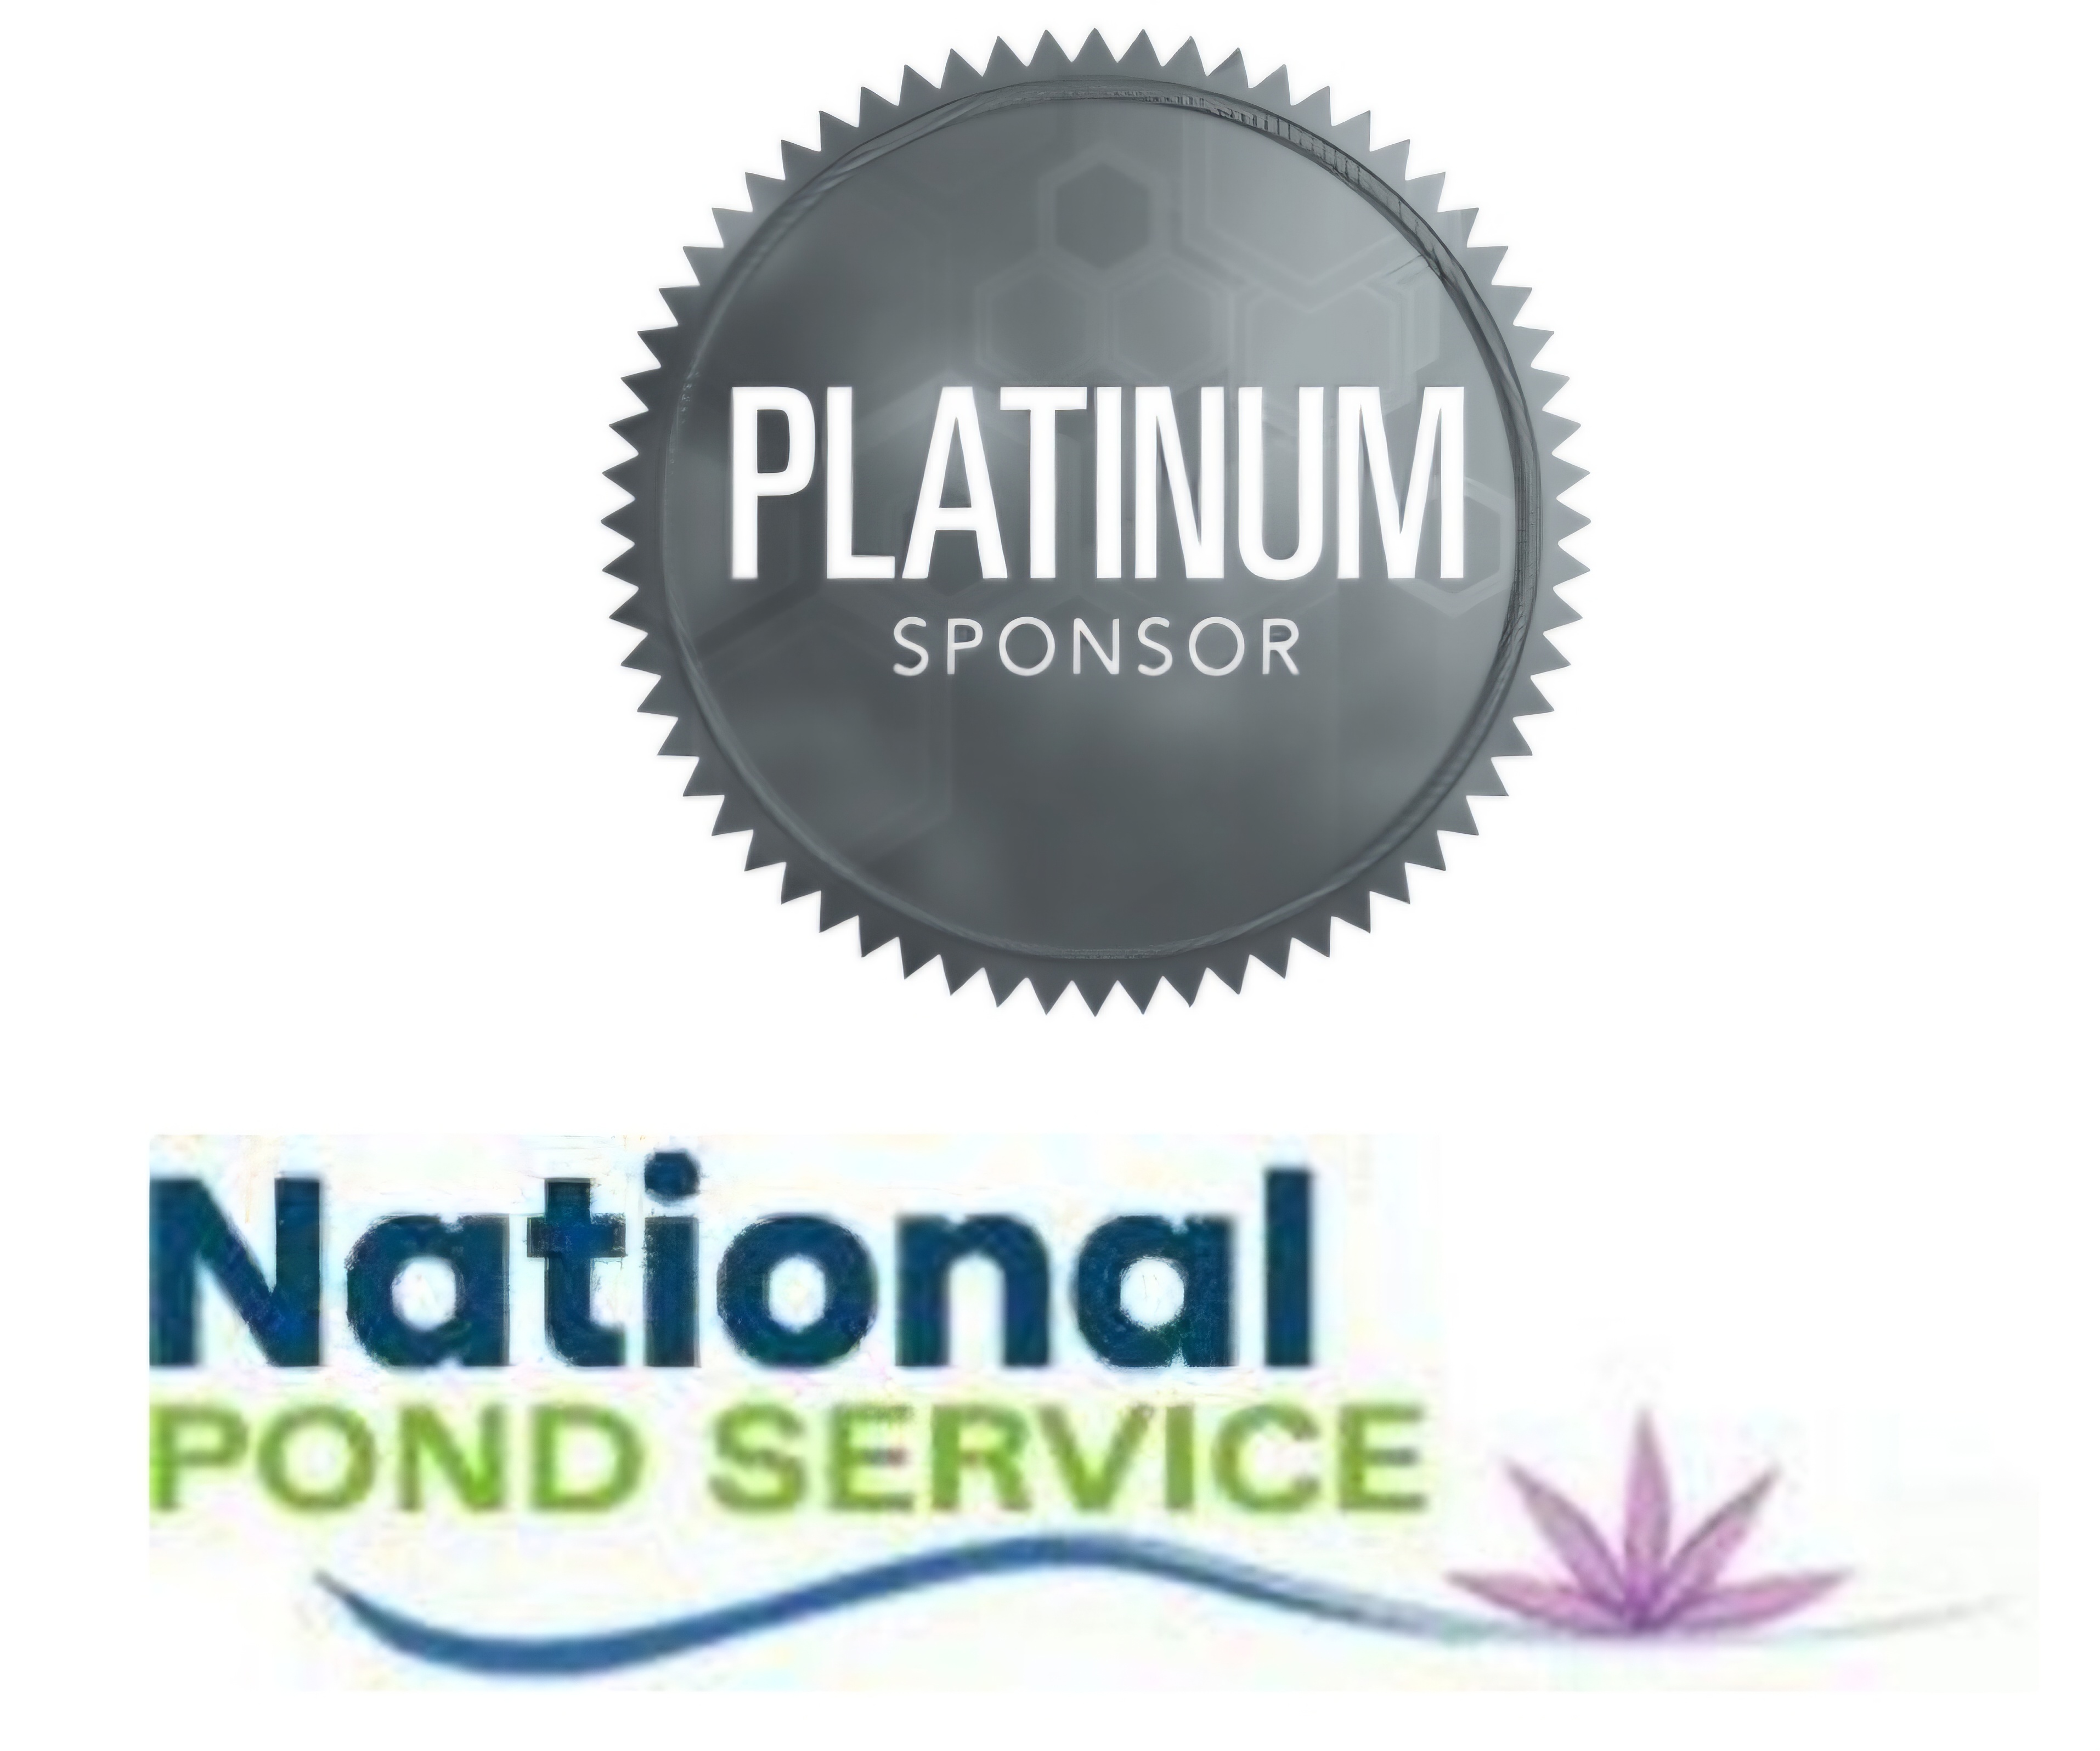 National Pond Service